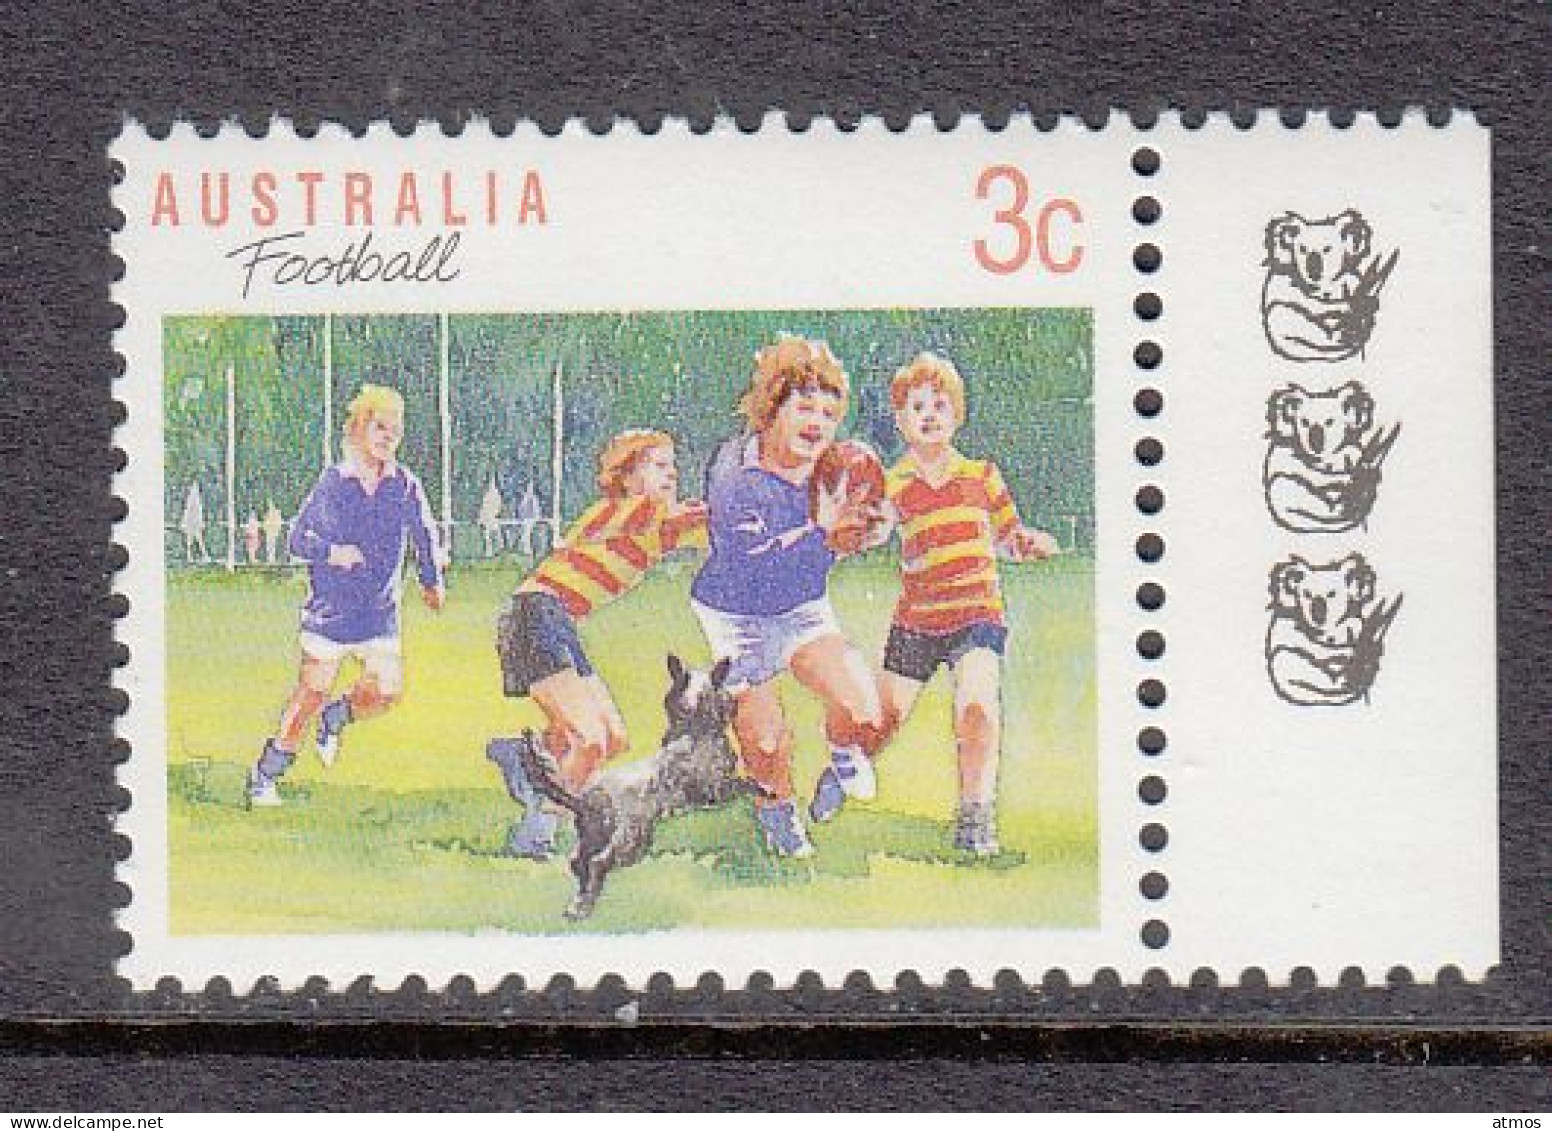 Australia MNH Michel Nr 1141 From 1989 Reprint 3 Koala - Mint Stamps